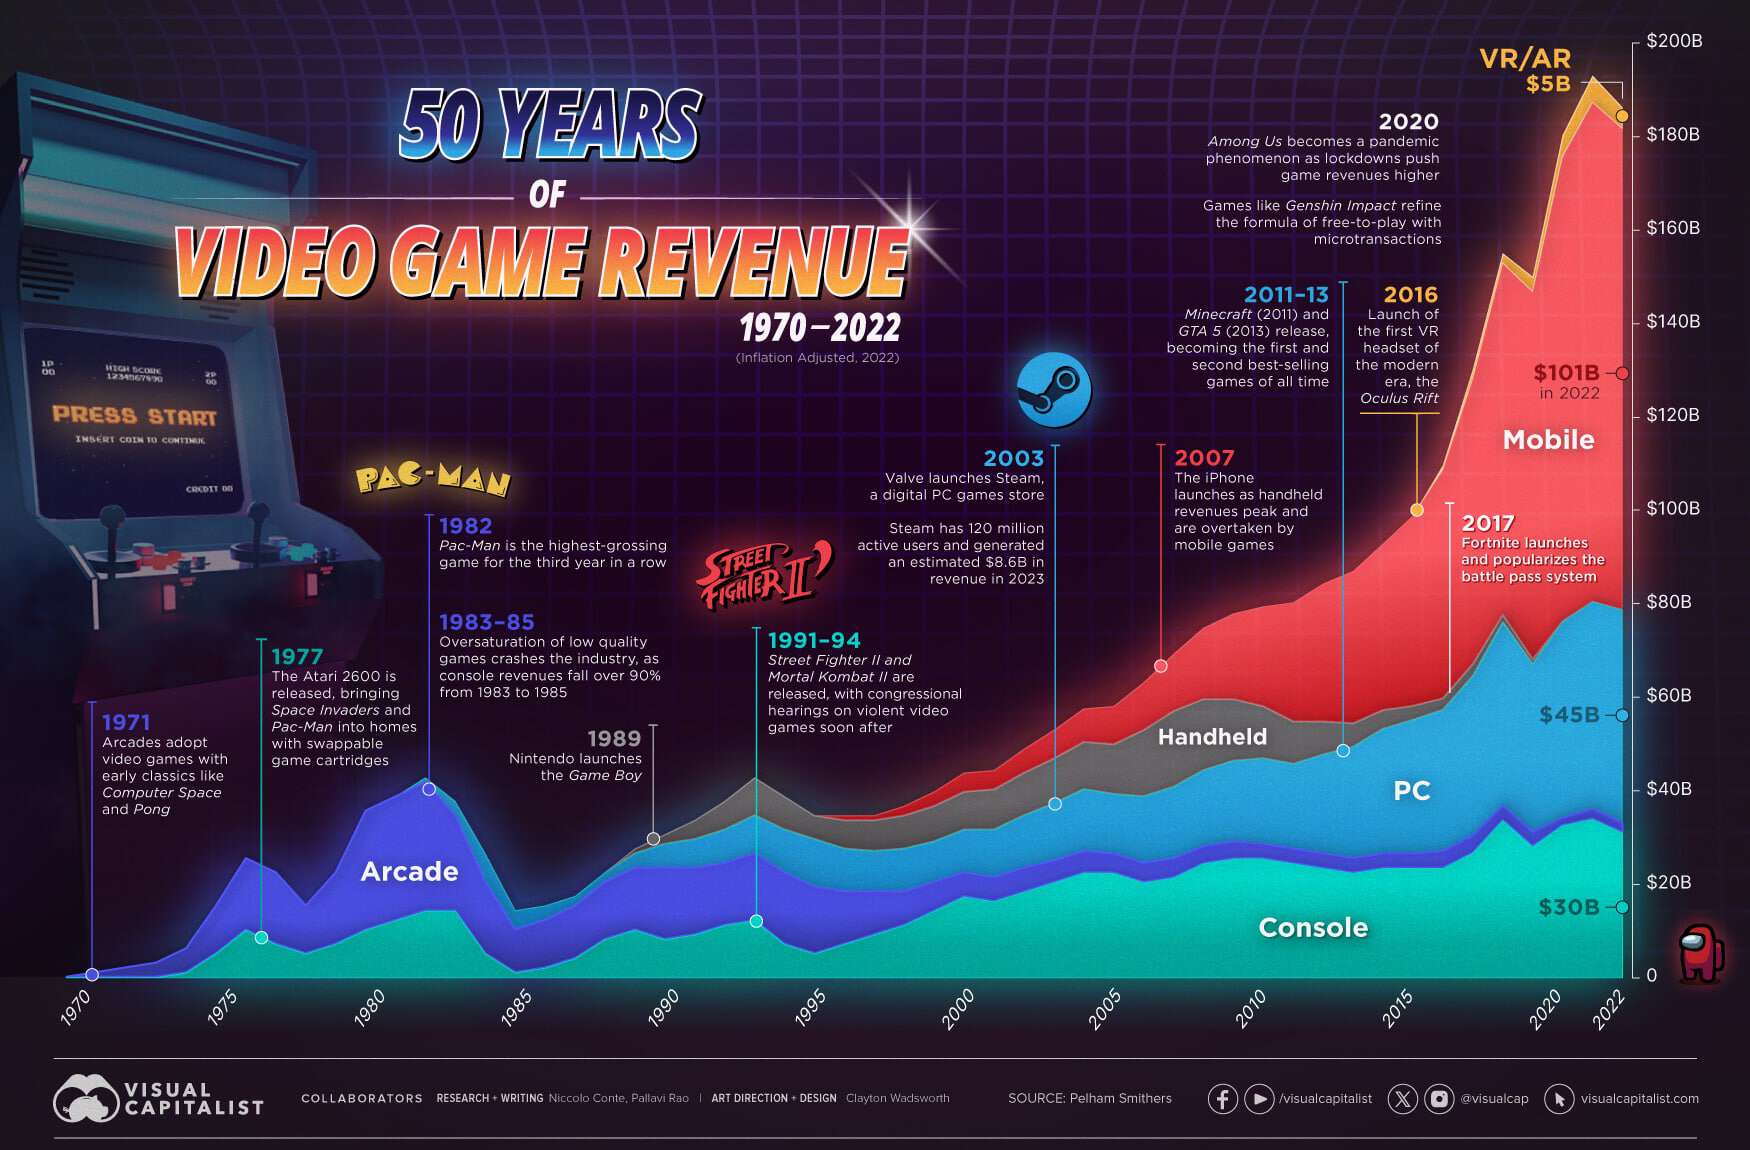 50 Years of Video Game Revenue Dec 31